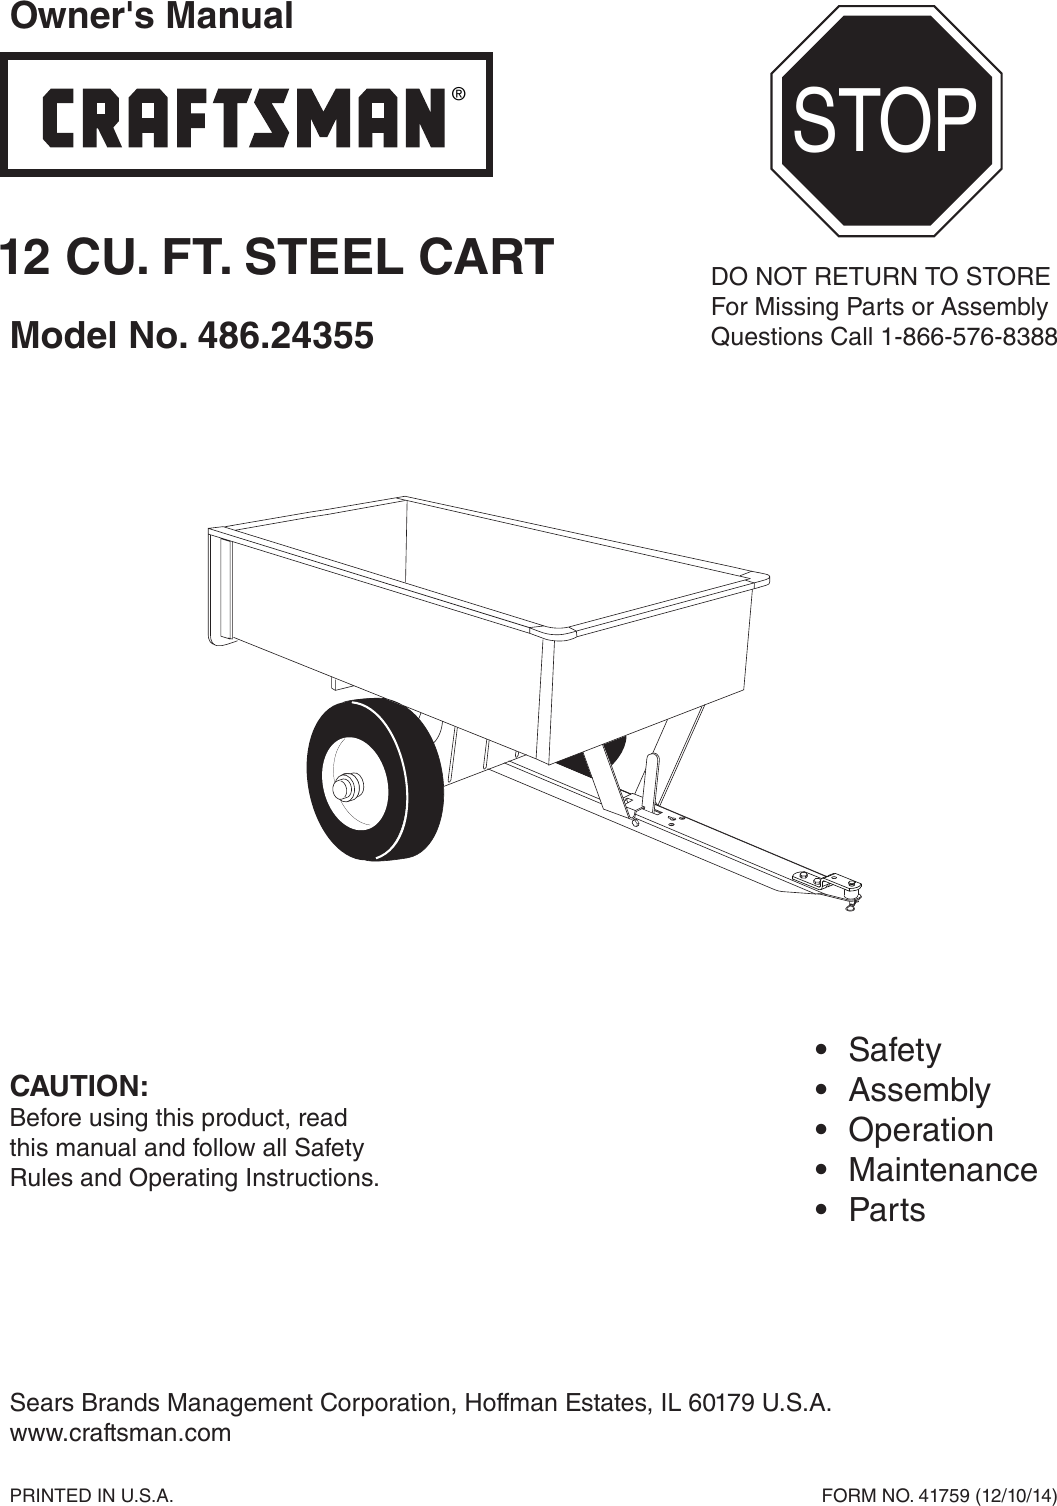 Page 1 of 12 - Craftsman Craftsman-12-Cu-Ft-Steel-Dump-Cart-Owners-Manual-  Craftsman-12-cu-ft-steel-dump-cart-owners-manual